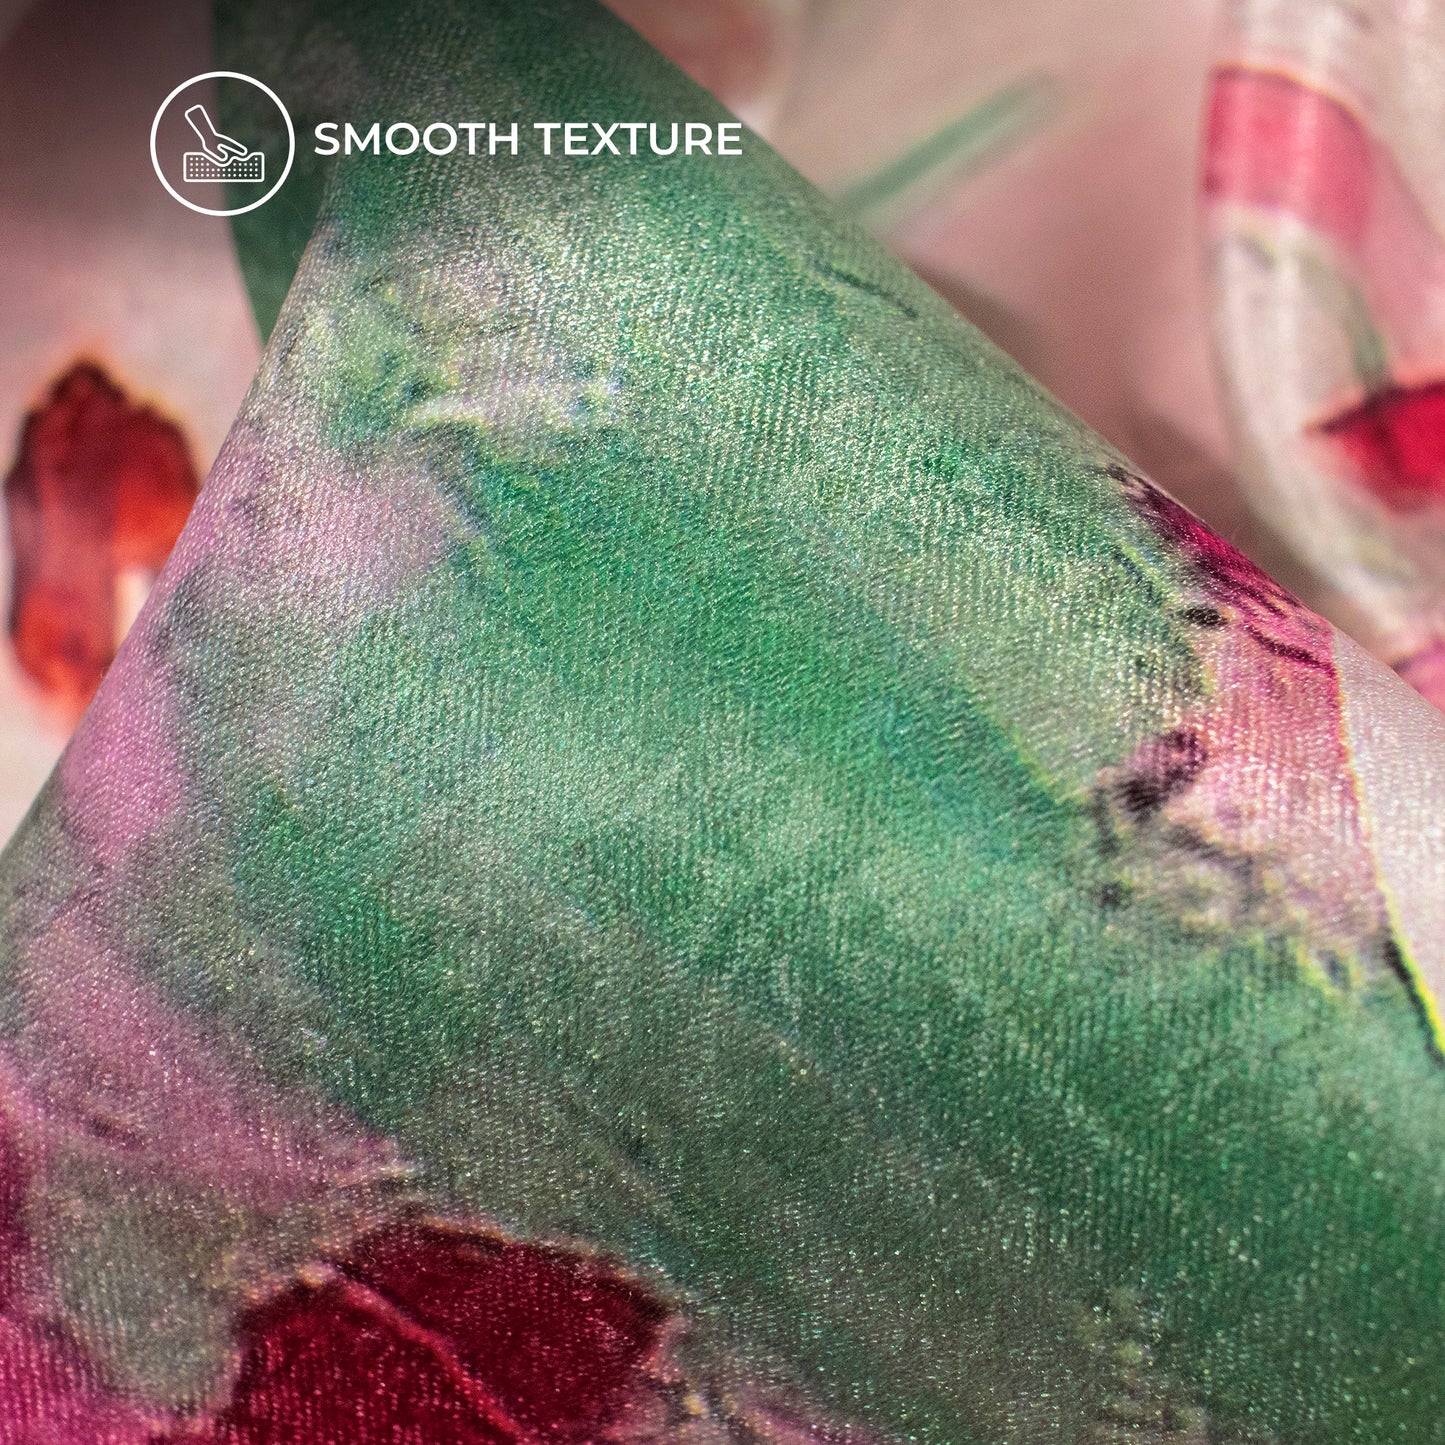 Floral Digital Print On Luxurious Lush Satin Fabric